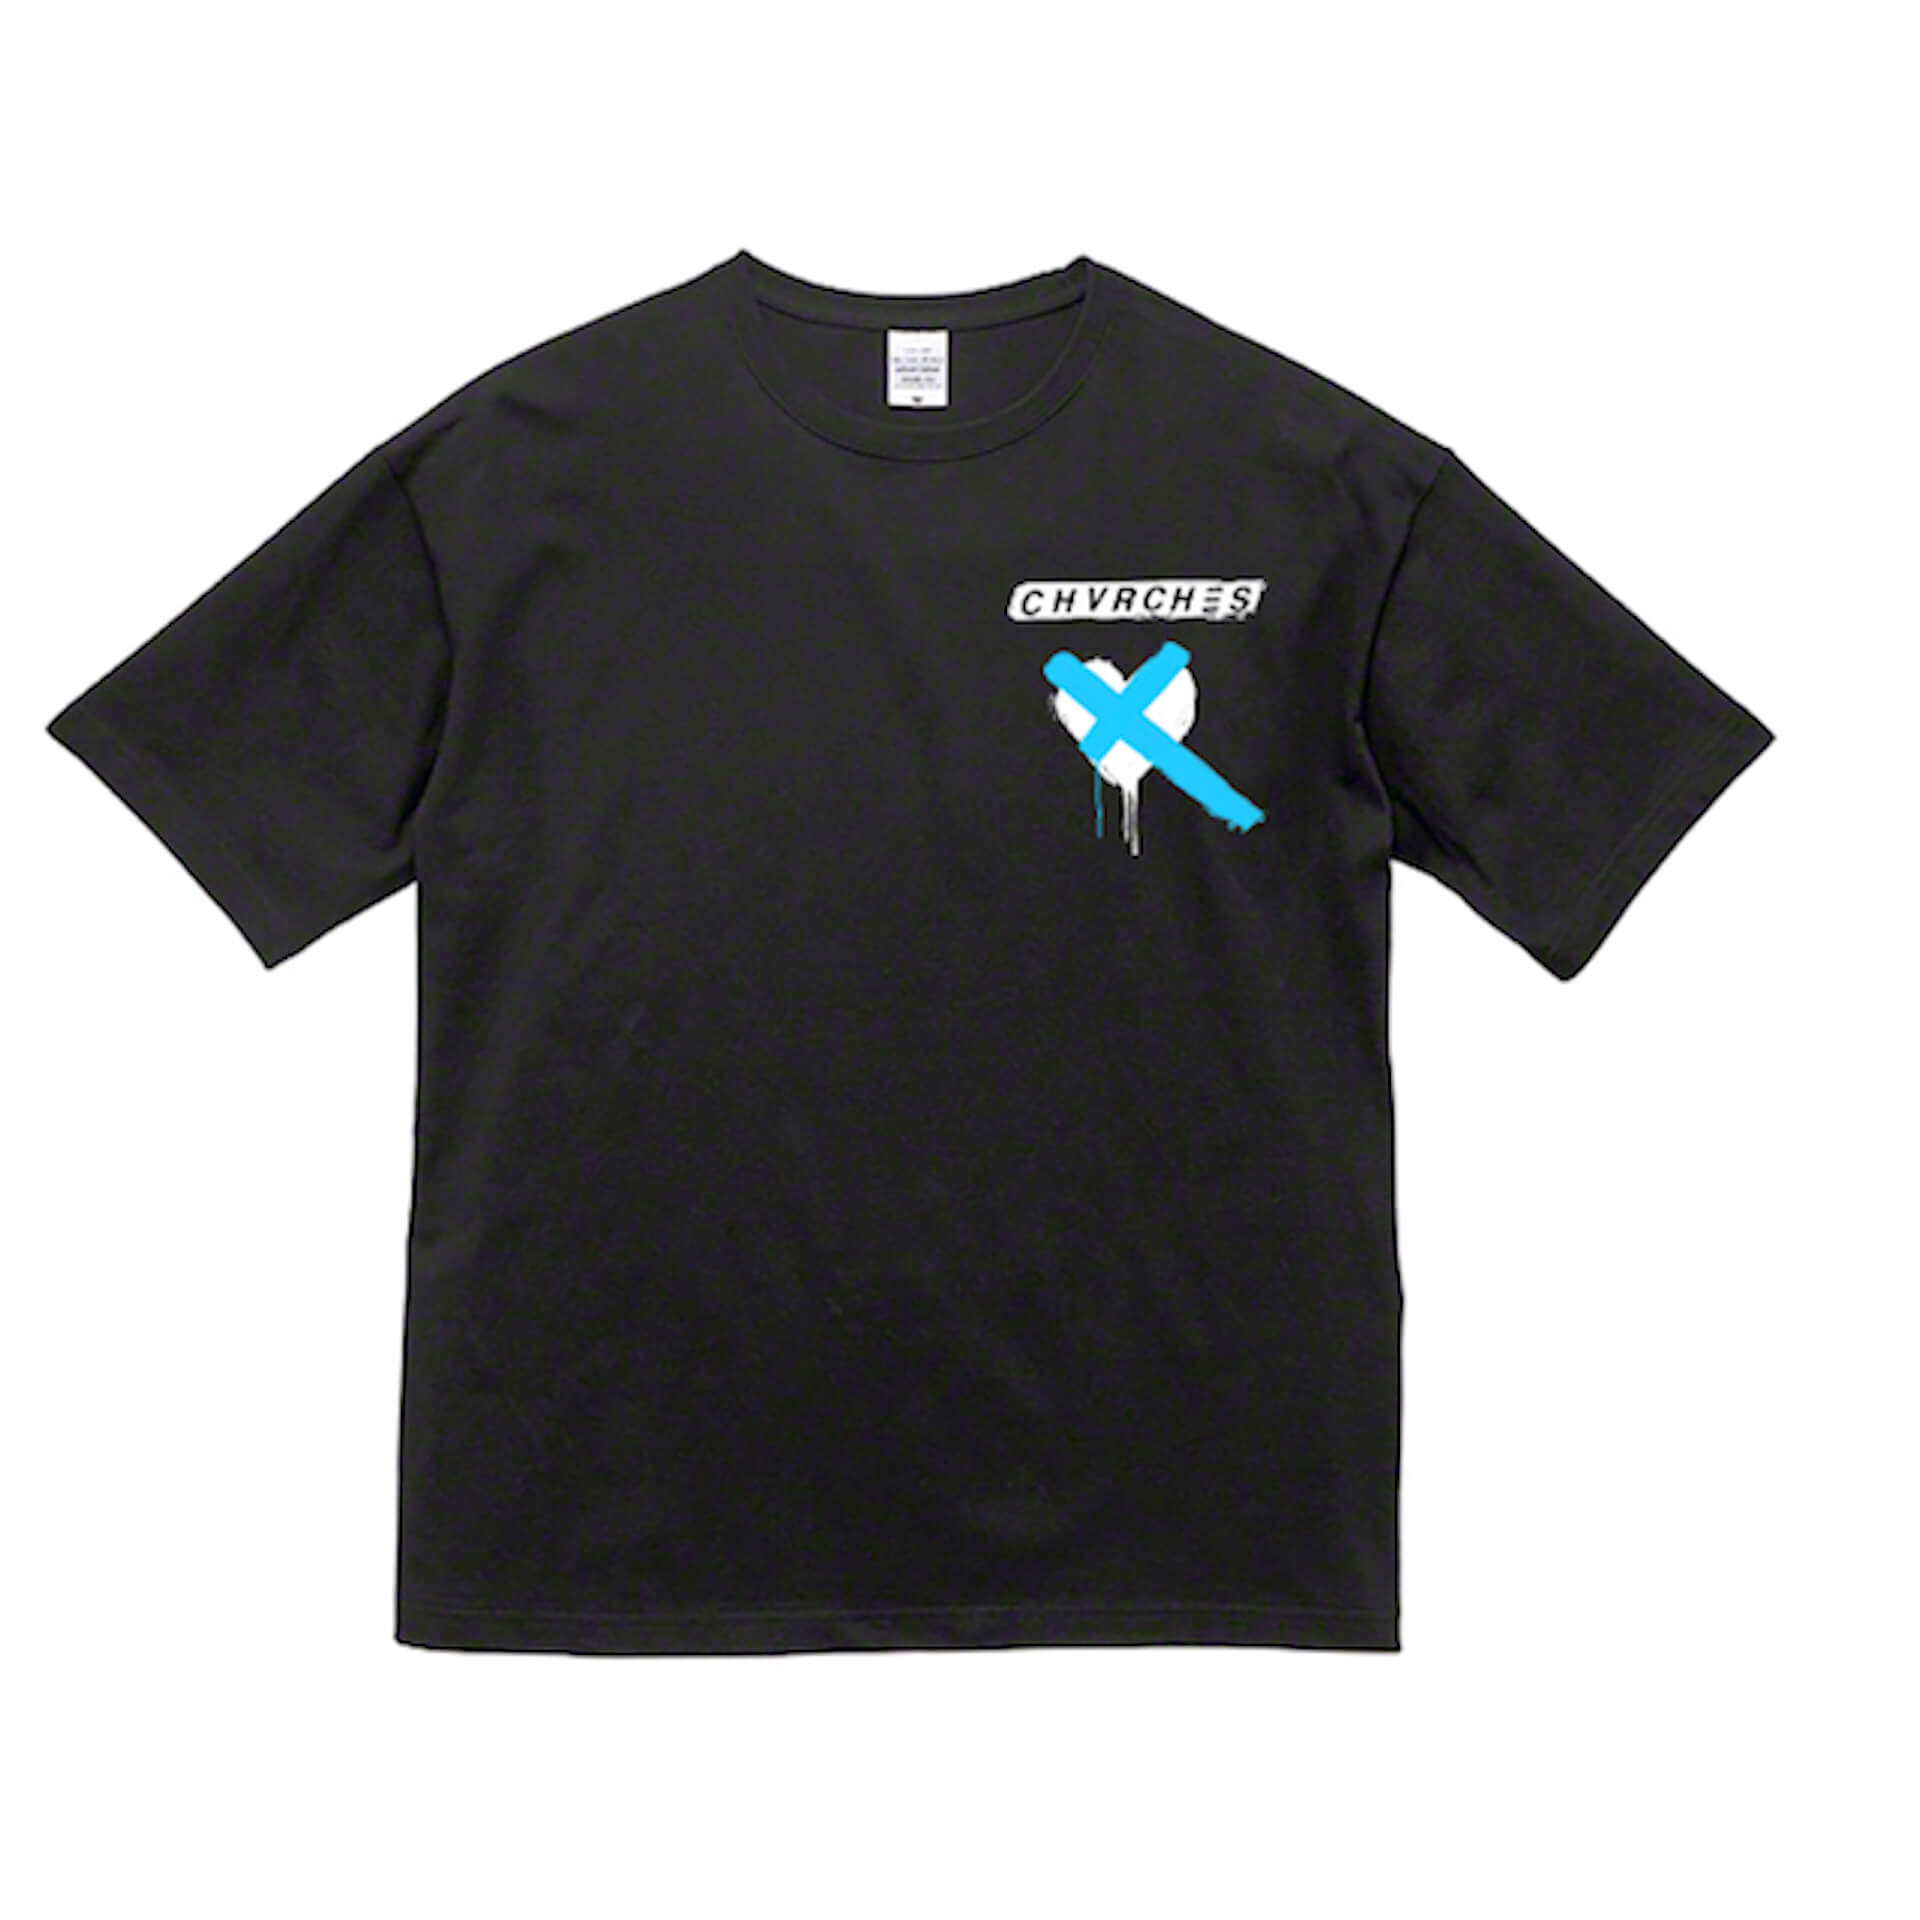 CHVRCHESの日本限定TシャツがBEATINK公式サイトで受注受付開始！アルバムアートワークをあしらったデザイン music200722_chvrches_02